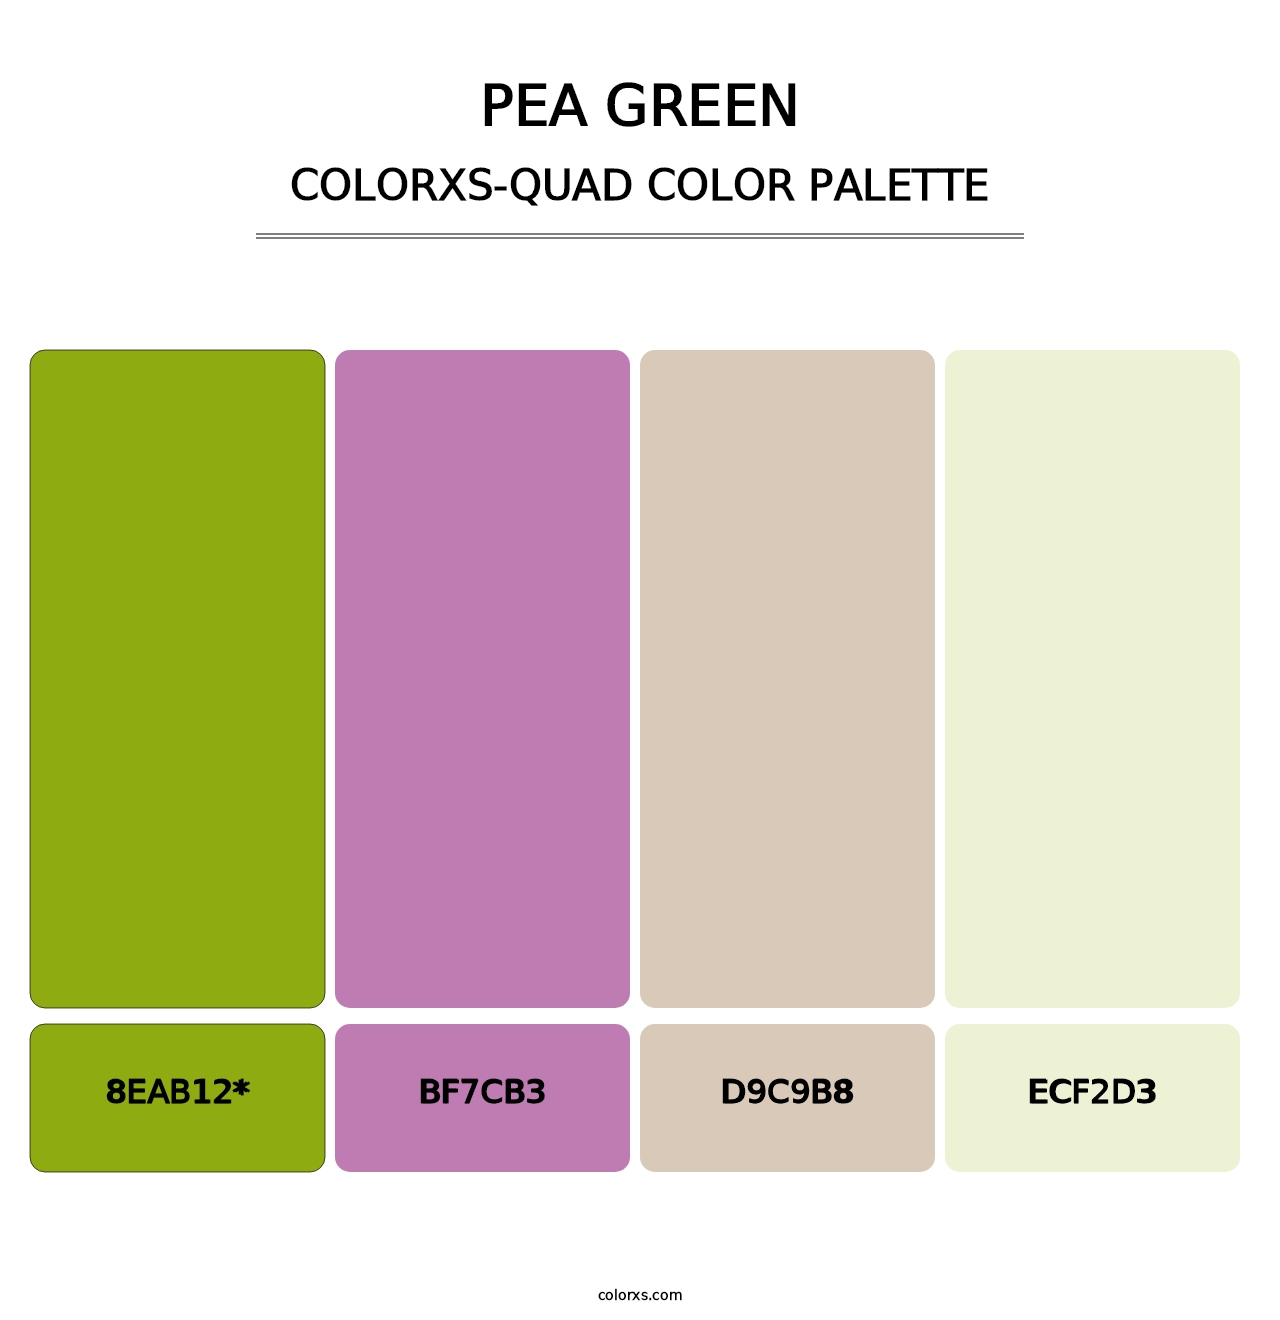 Pea Green - Colorxs Quad Palette